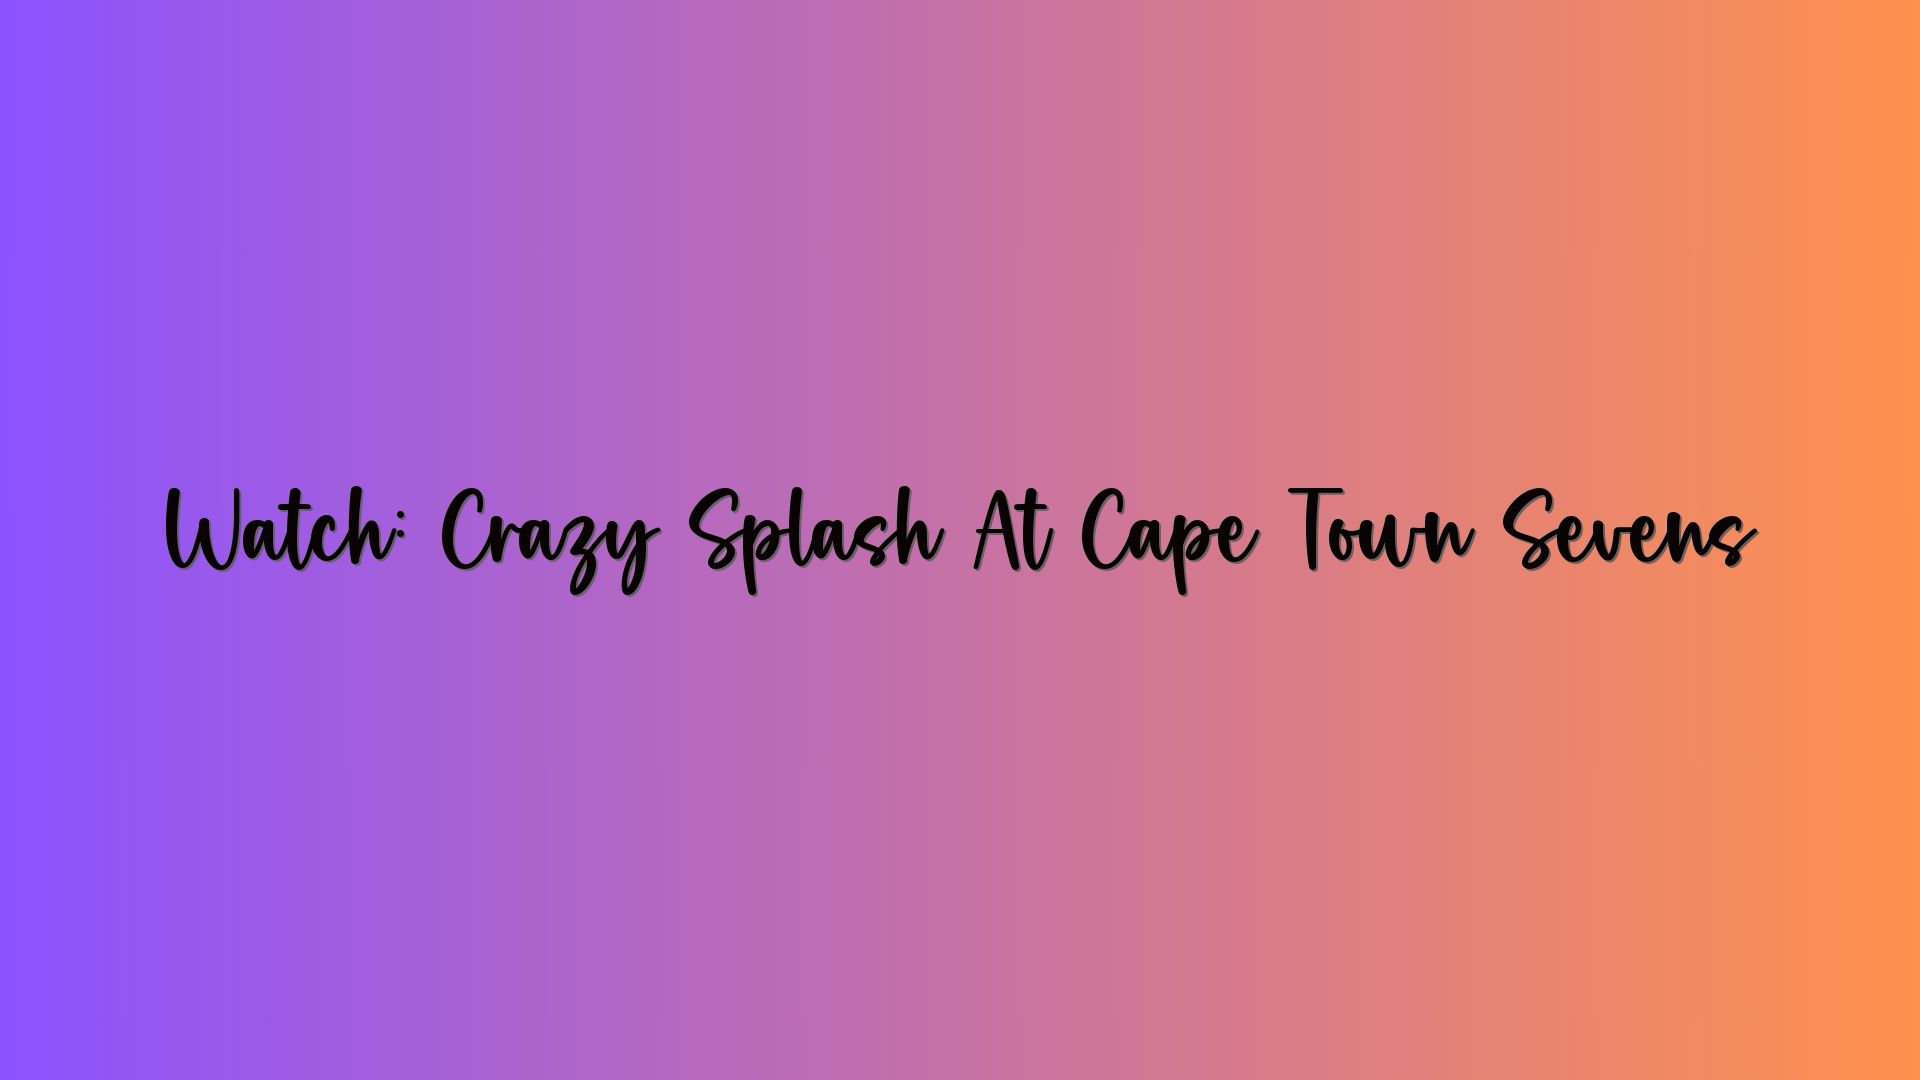 Watch: Crazy Splash At Cape Town Sevens